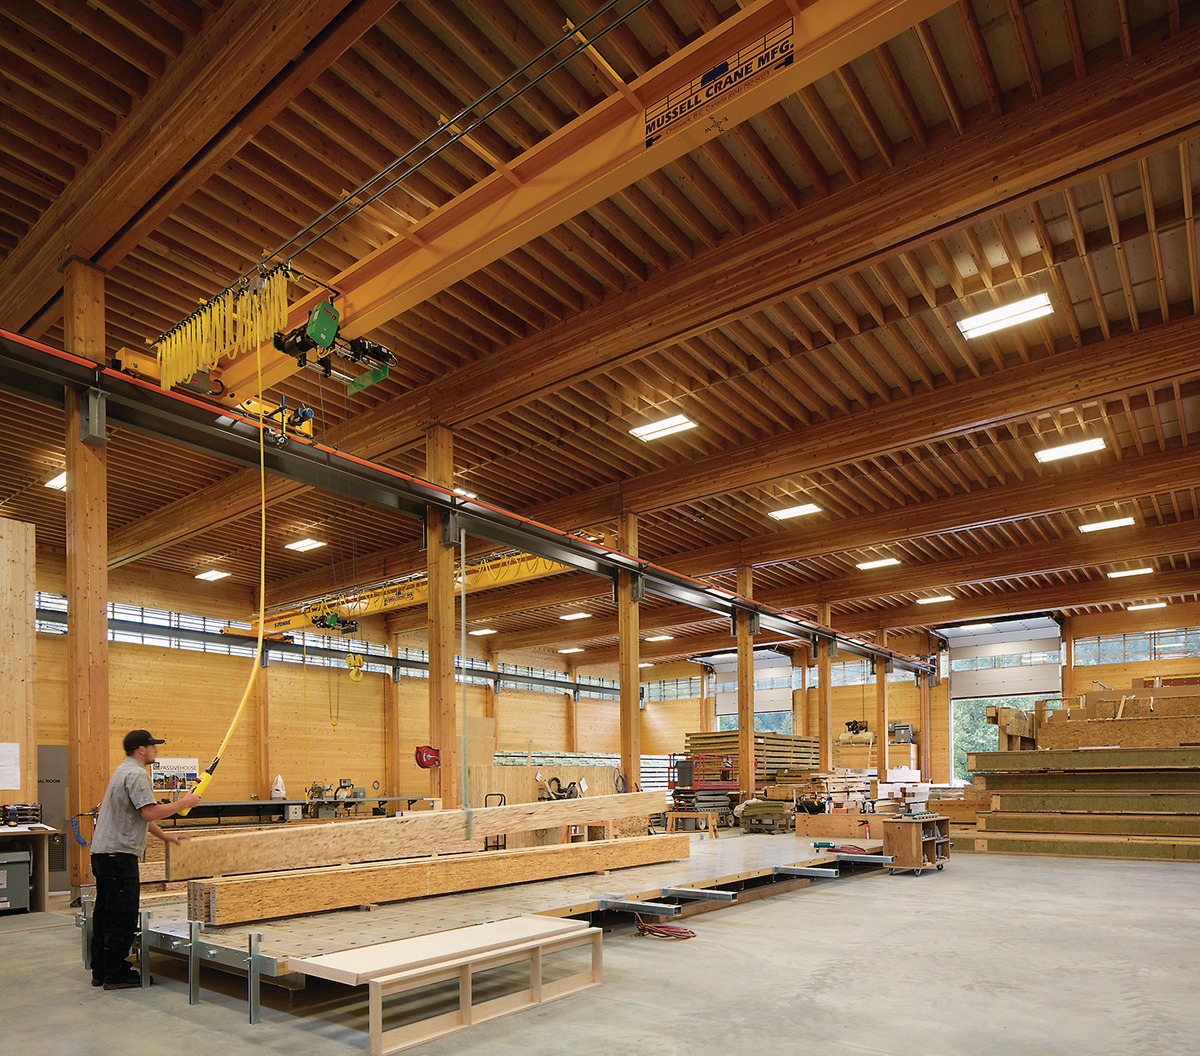 BC被动式房屋工厂的内部视图显示工人使用桥式起重机移动大量的木材梁